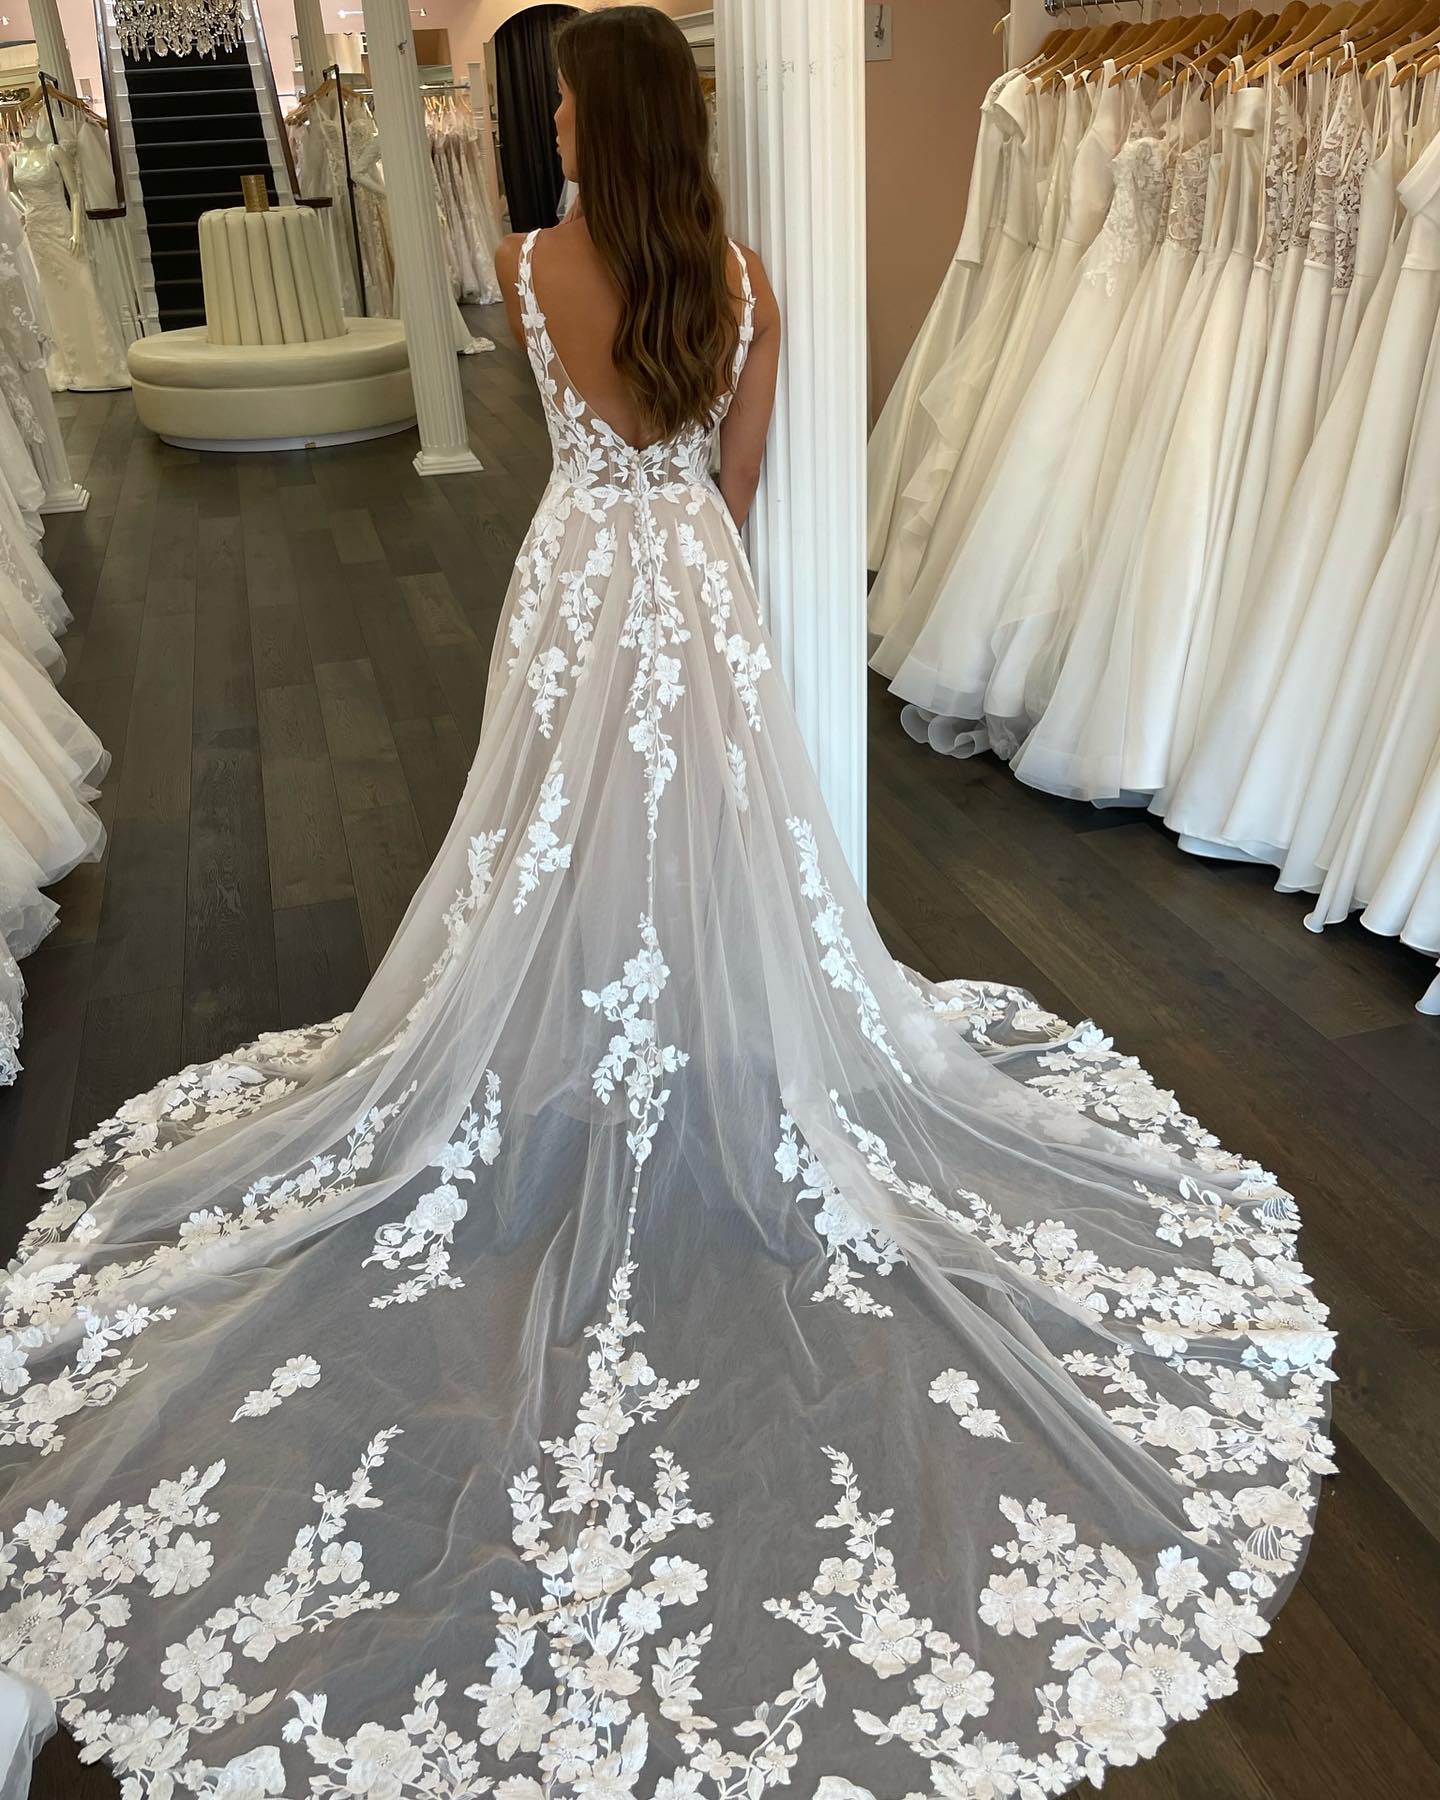 Bride in sheer gown